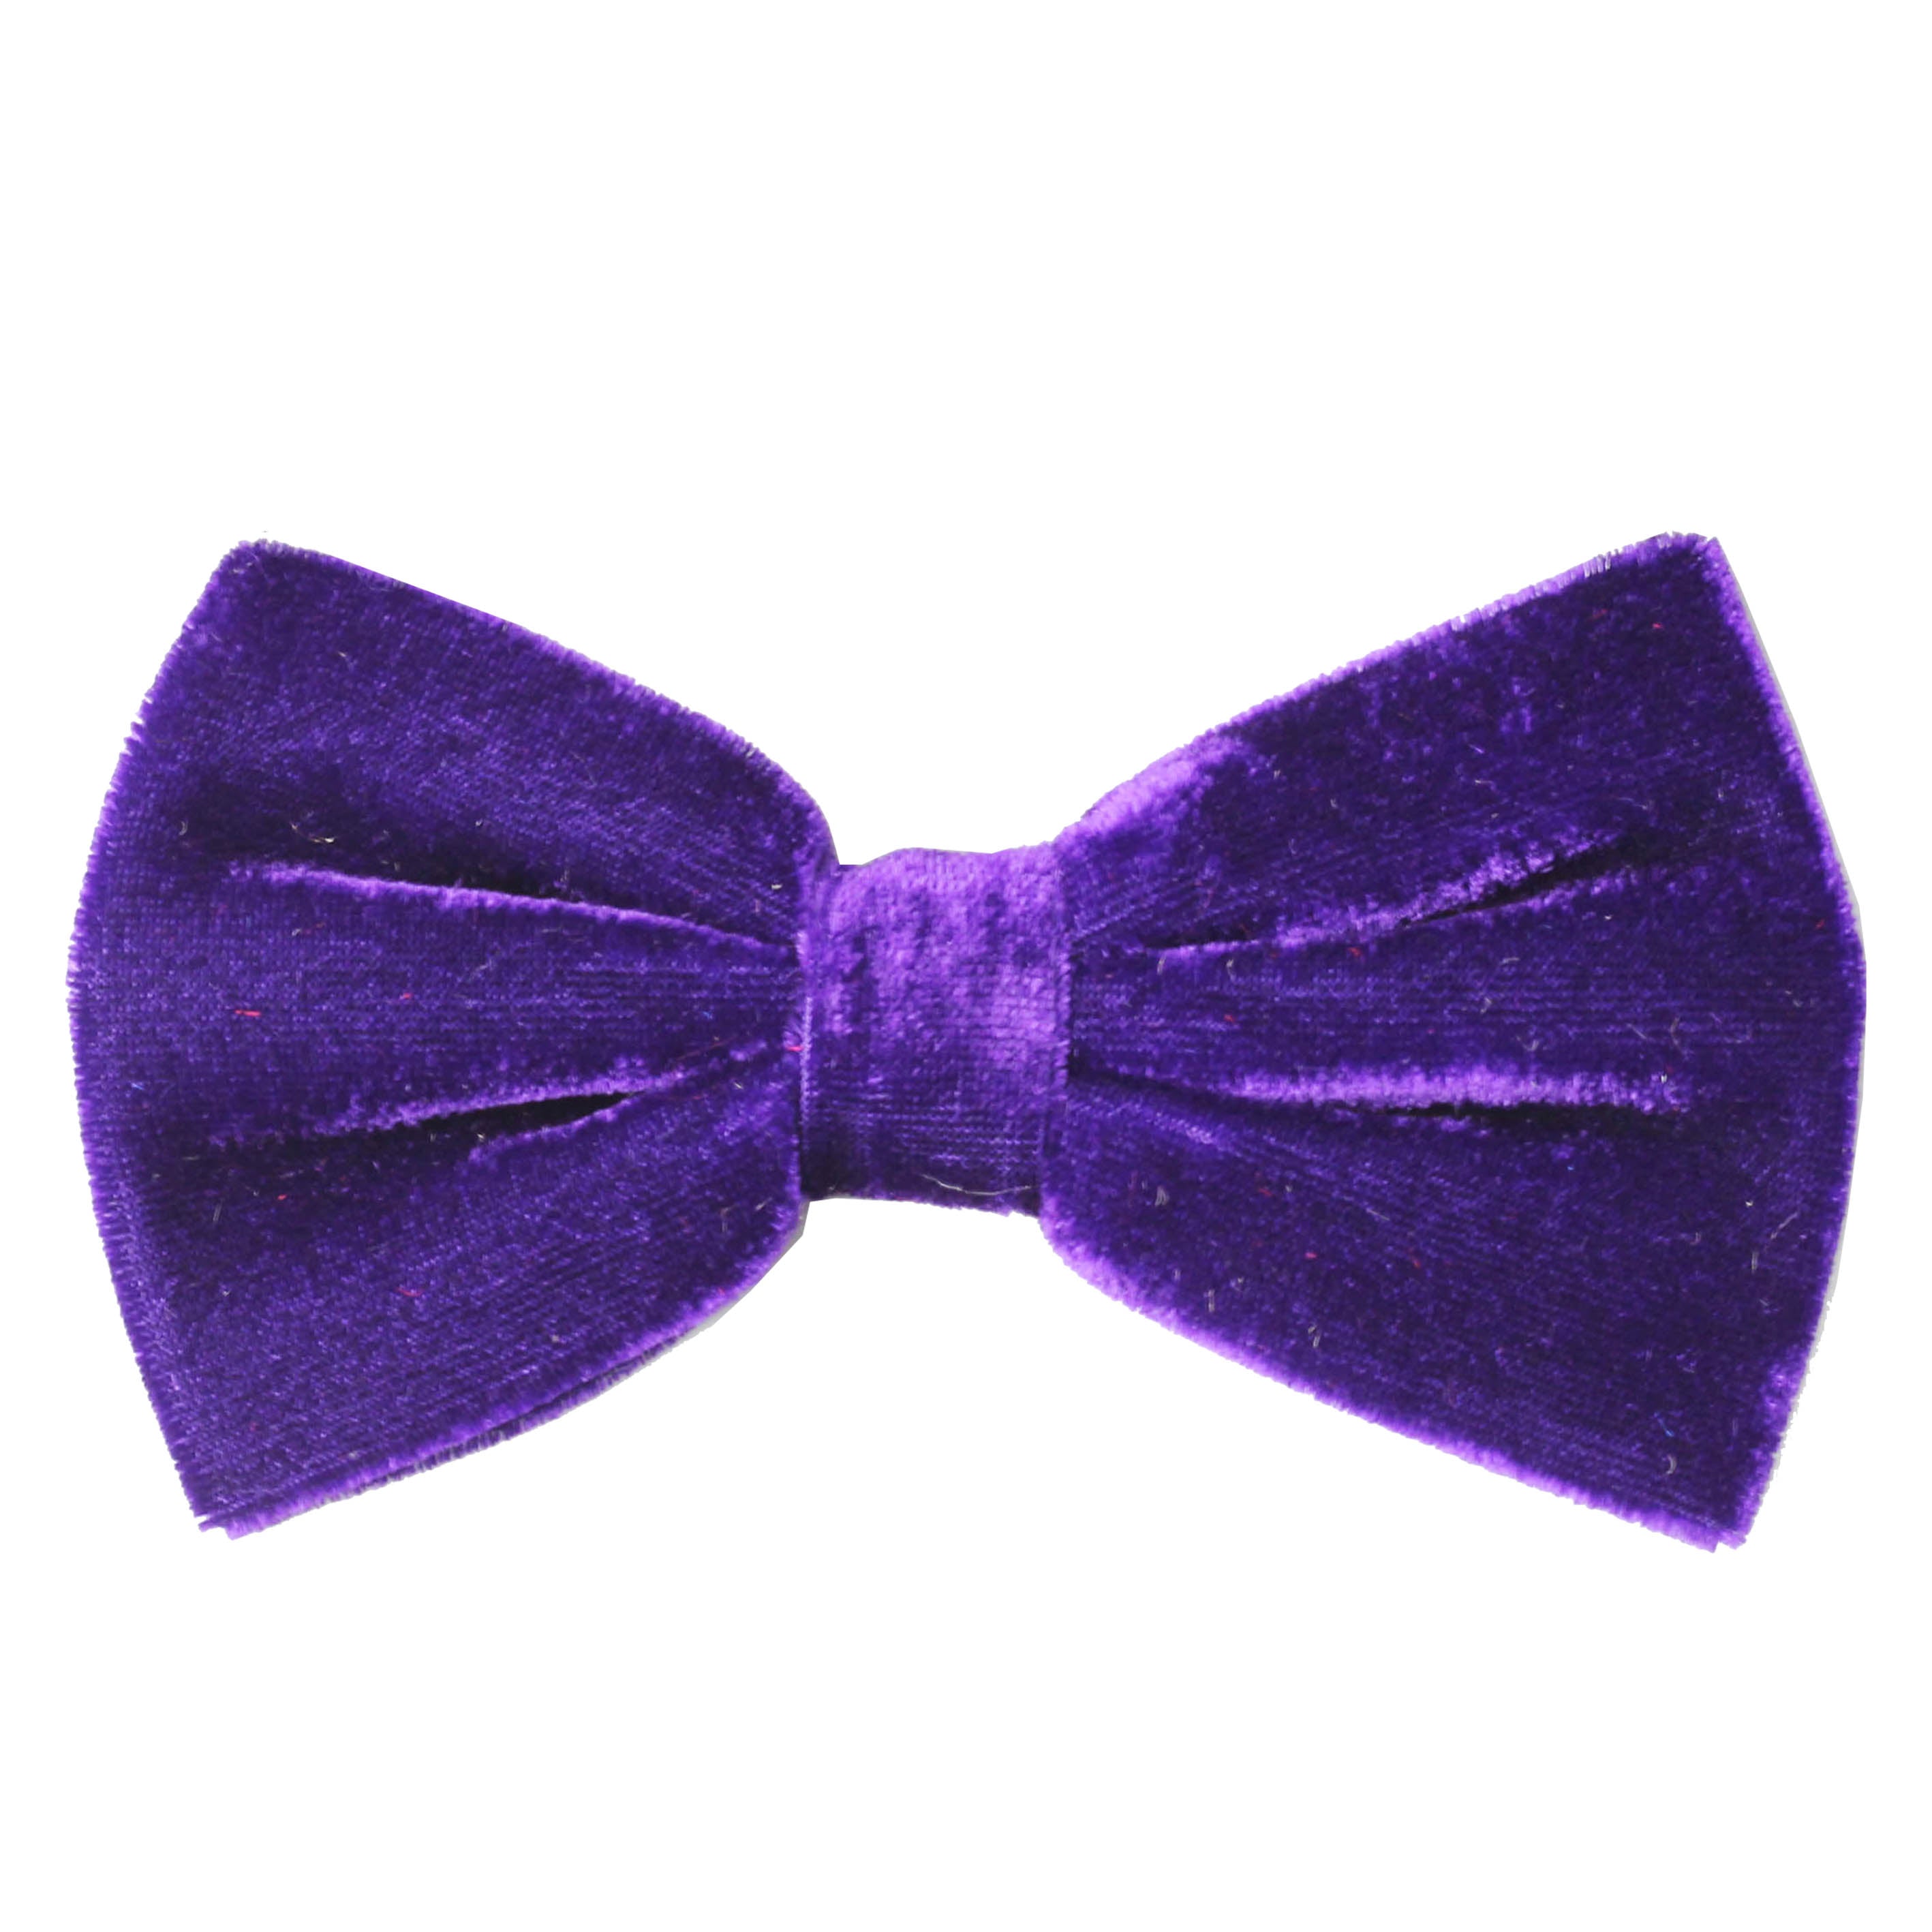 Purple Shiny Velvet Bow Tie With Cufflink Pocket Square